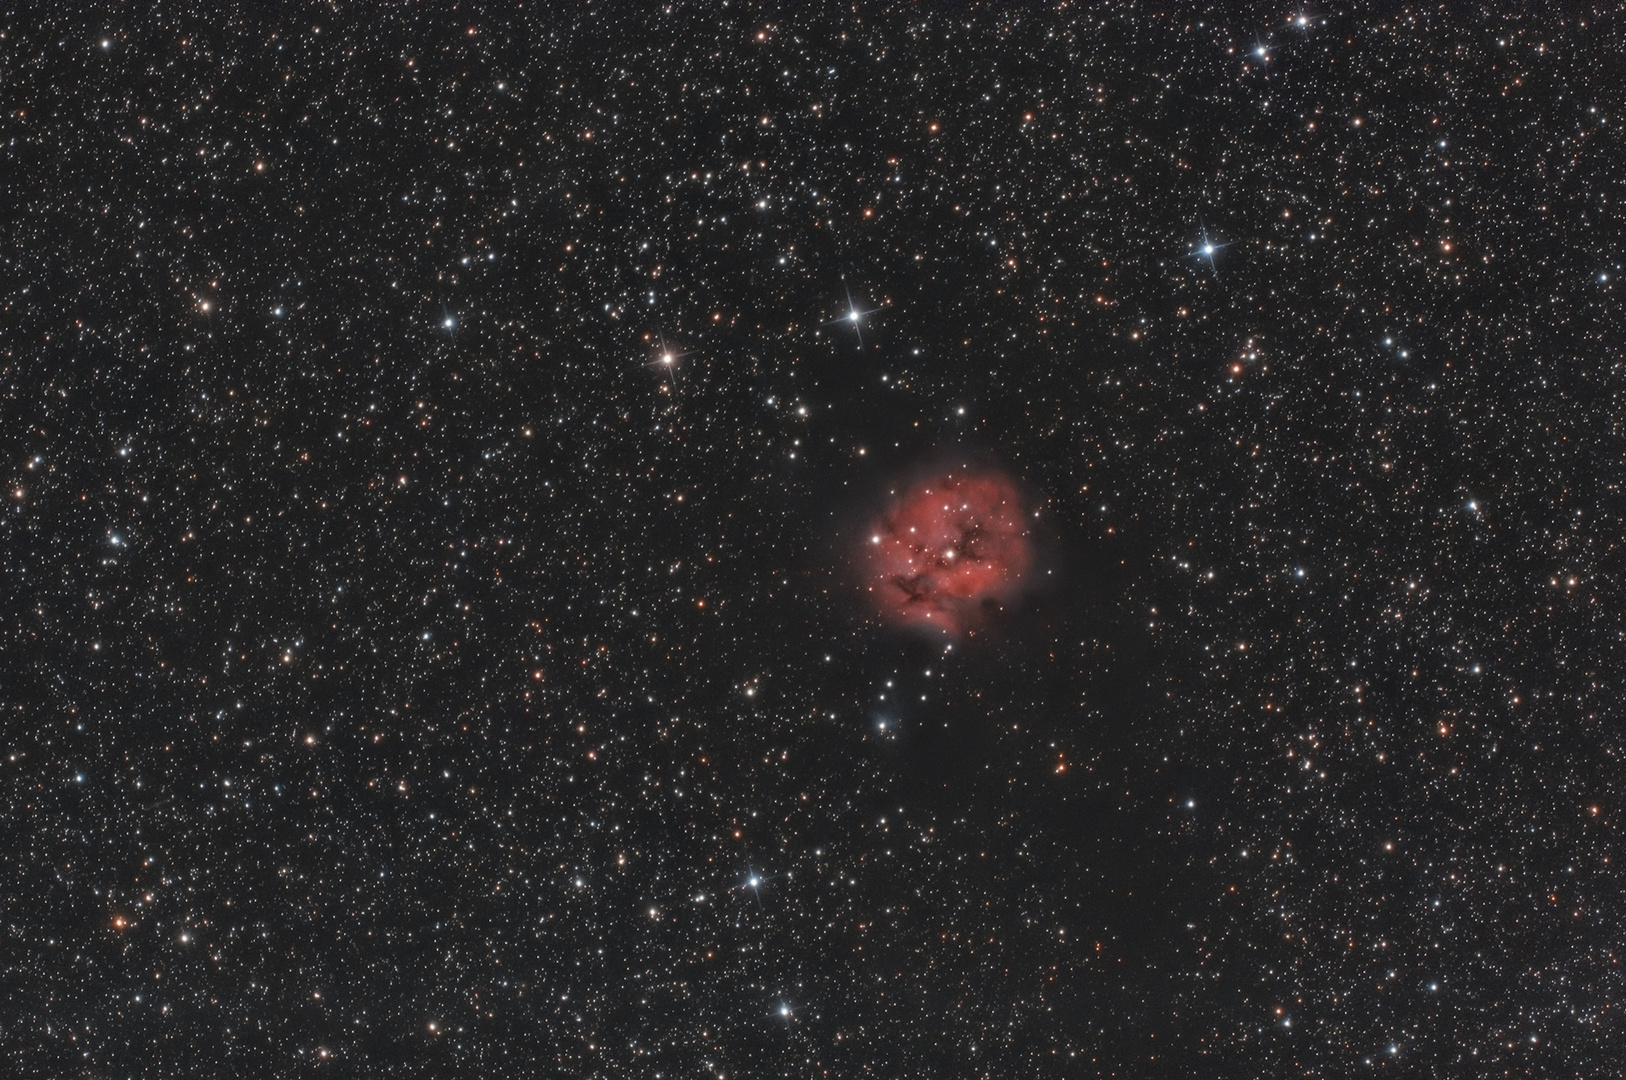 Nebulosa Bozzolo